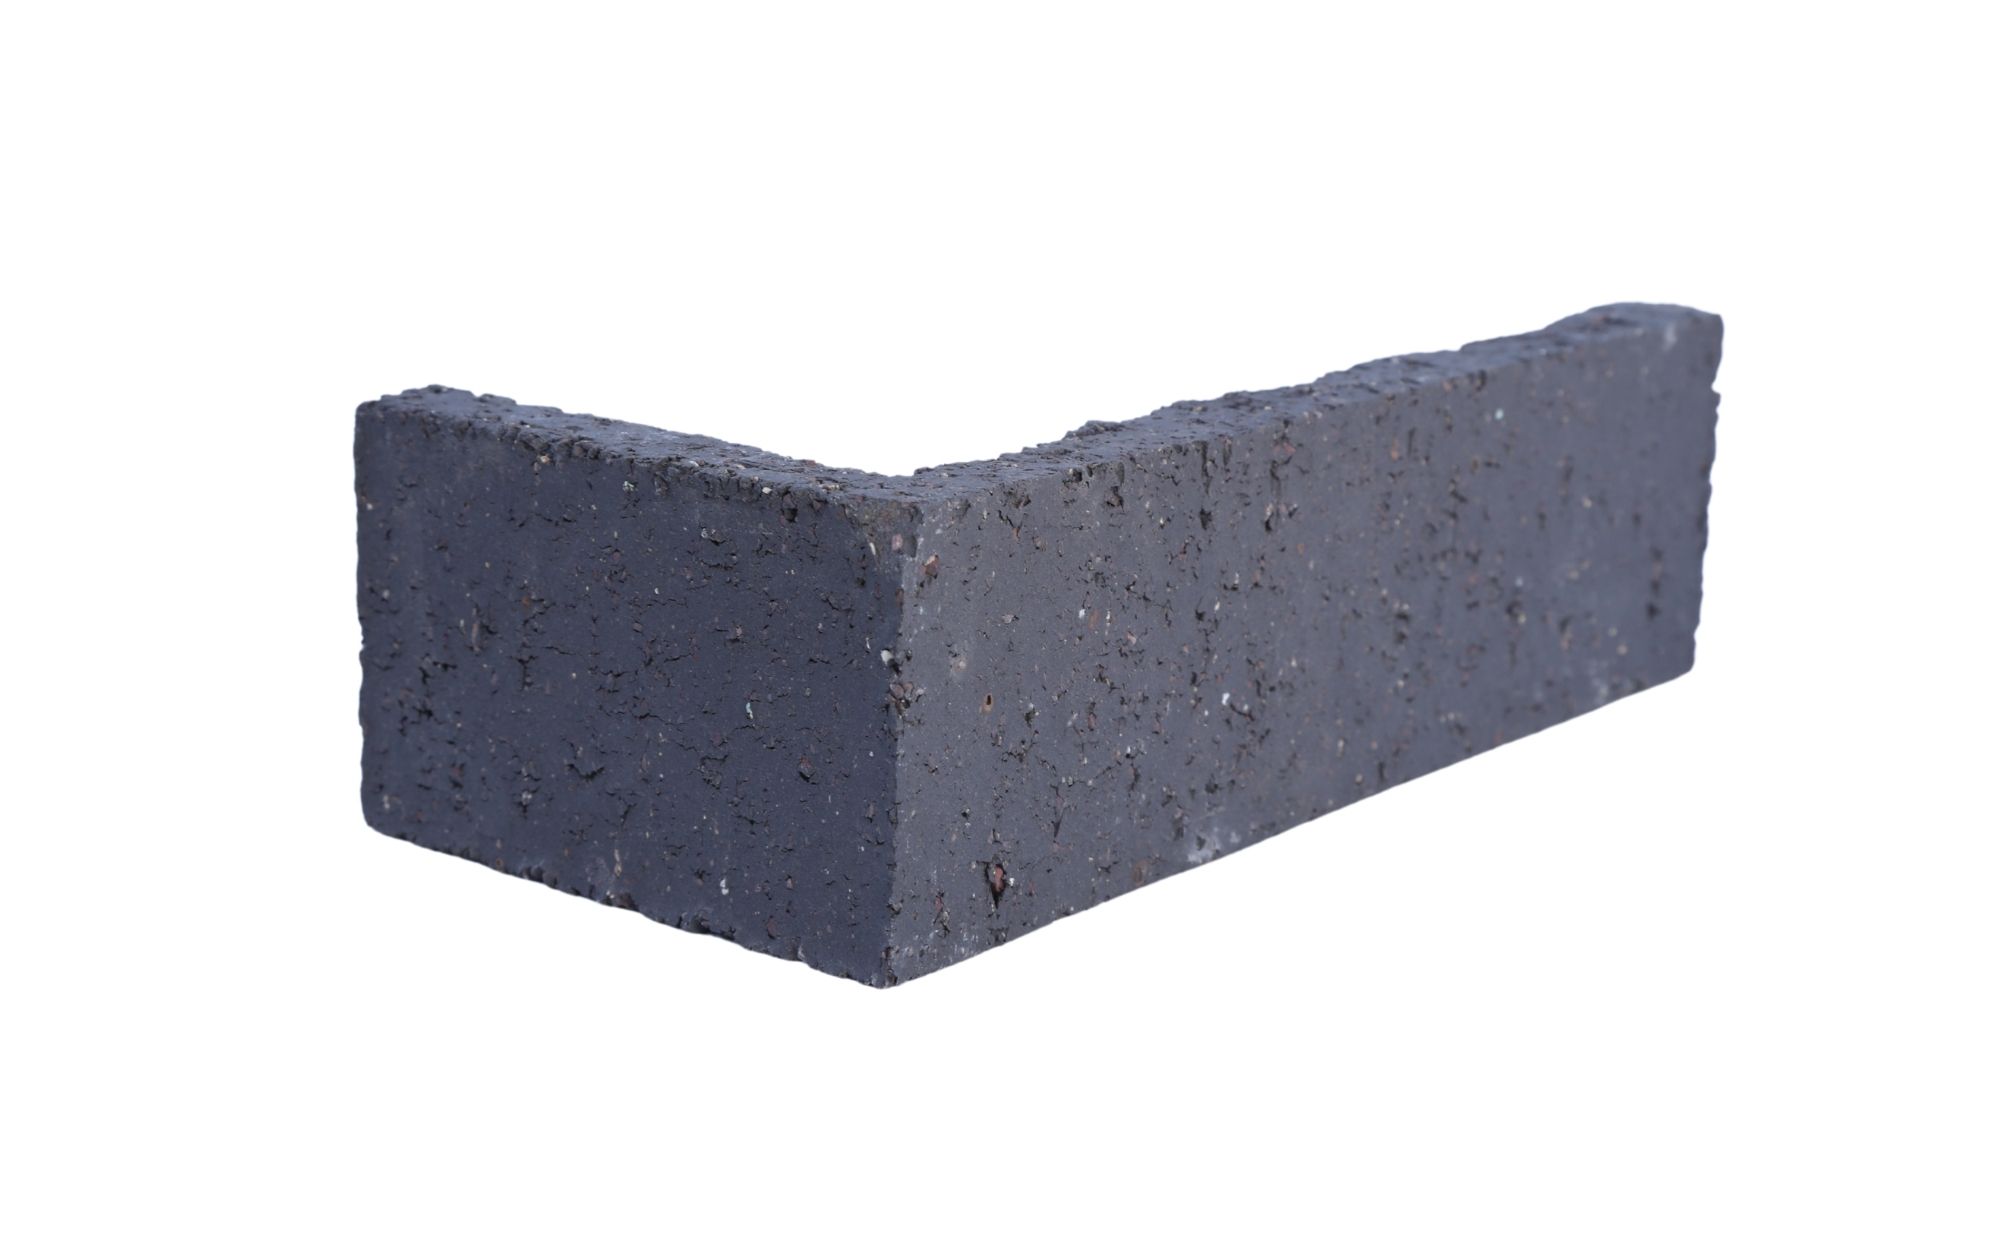 Thin Norman 2¼ x 12 - Interstate Brick